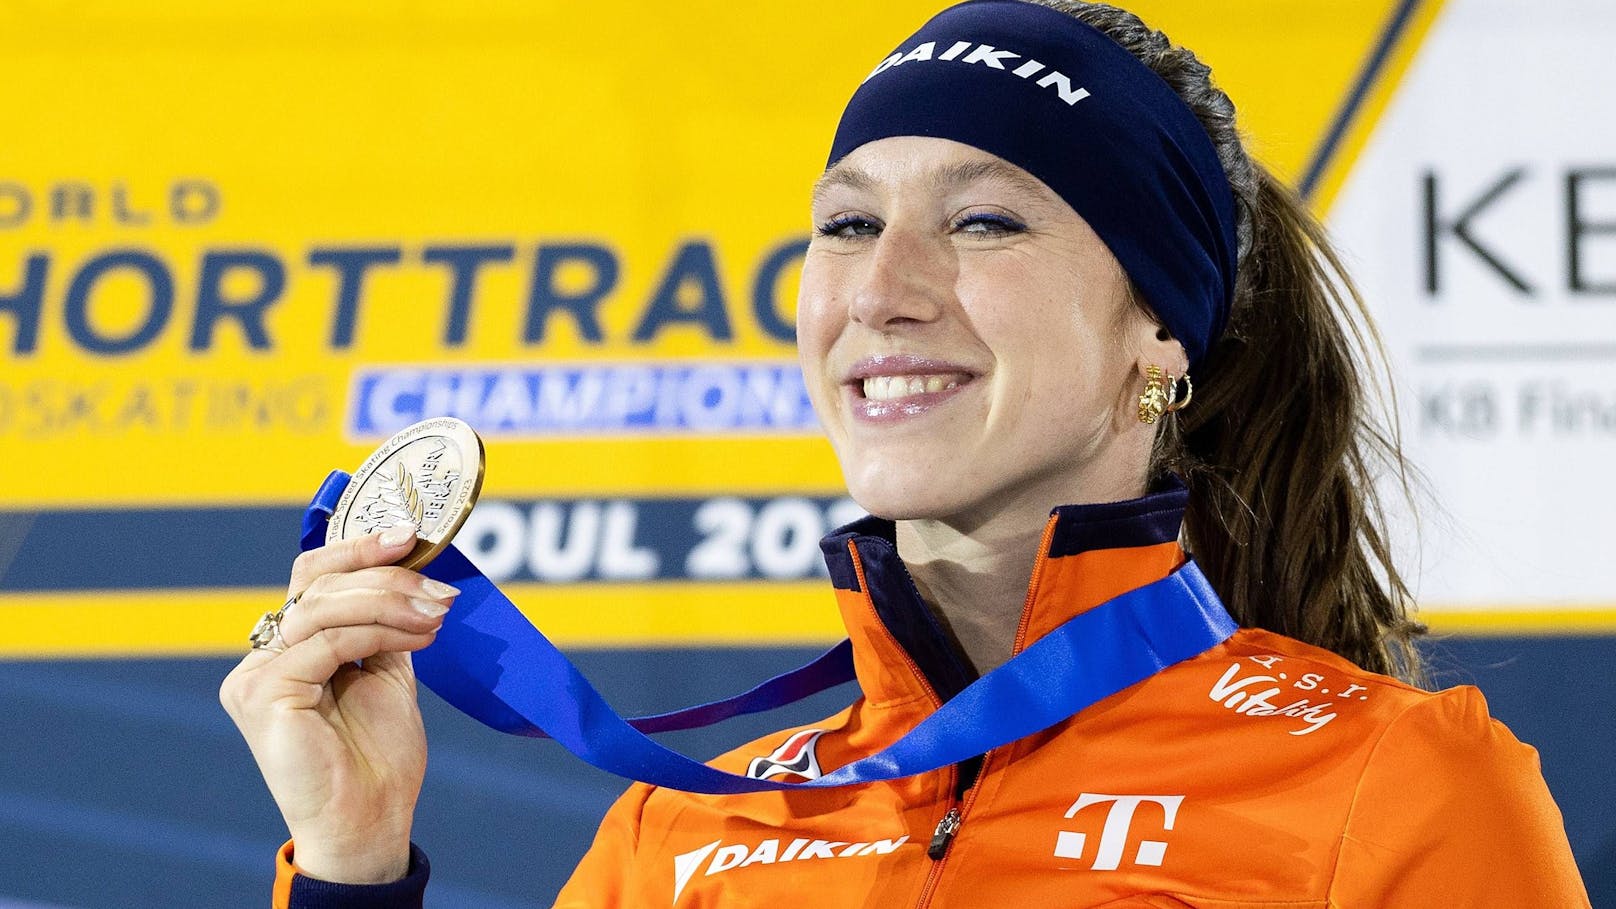 Olympiasiegerin wird Rücken am Eis aufgeschlitzt